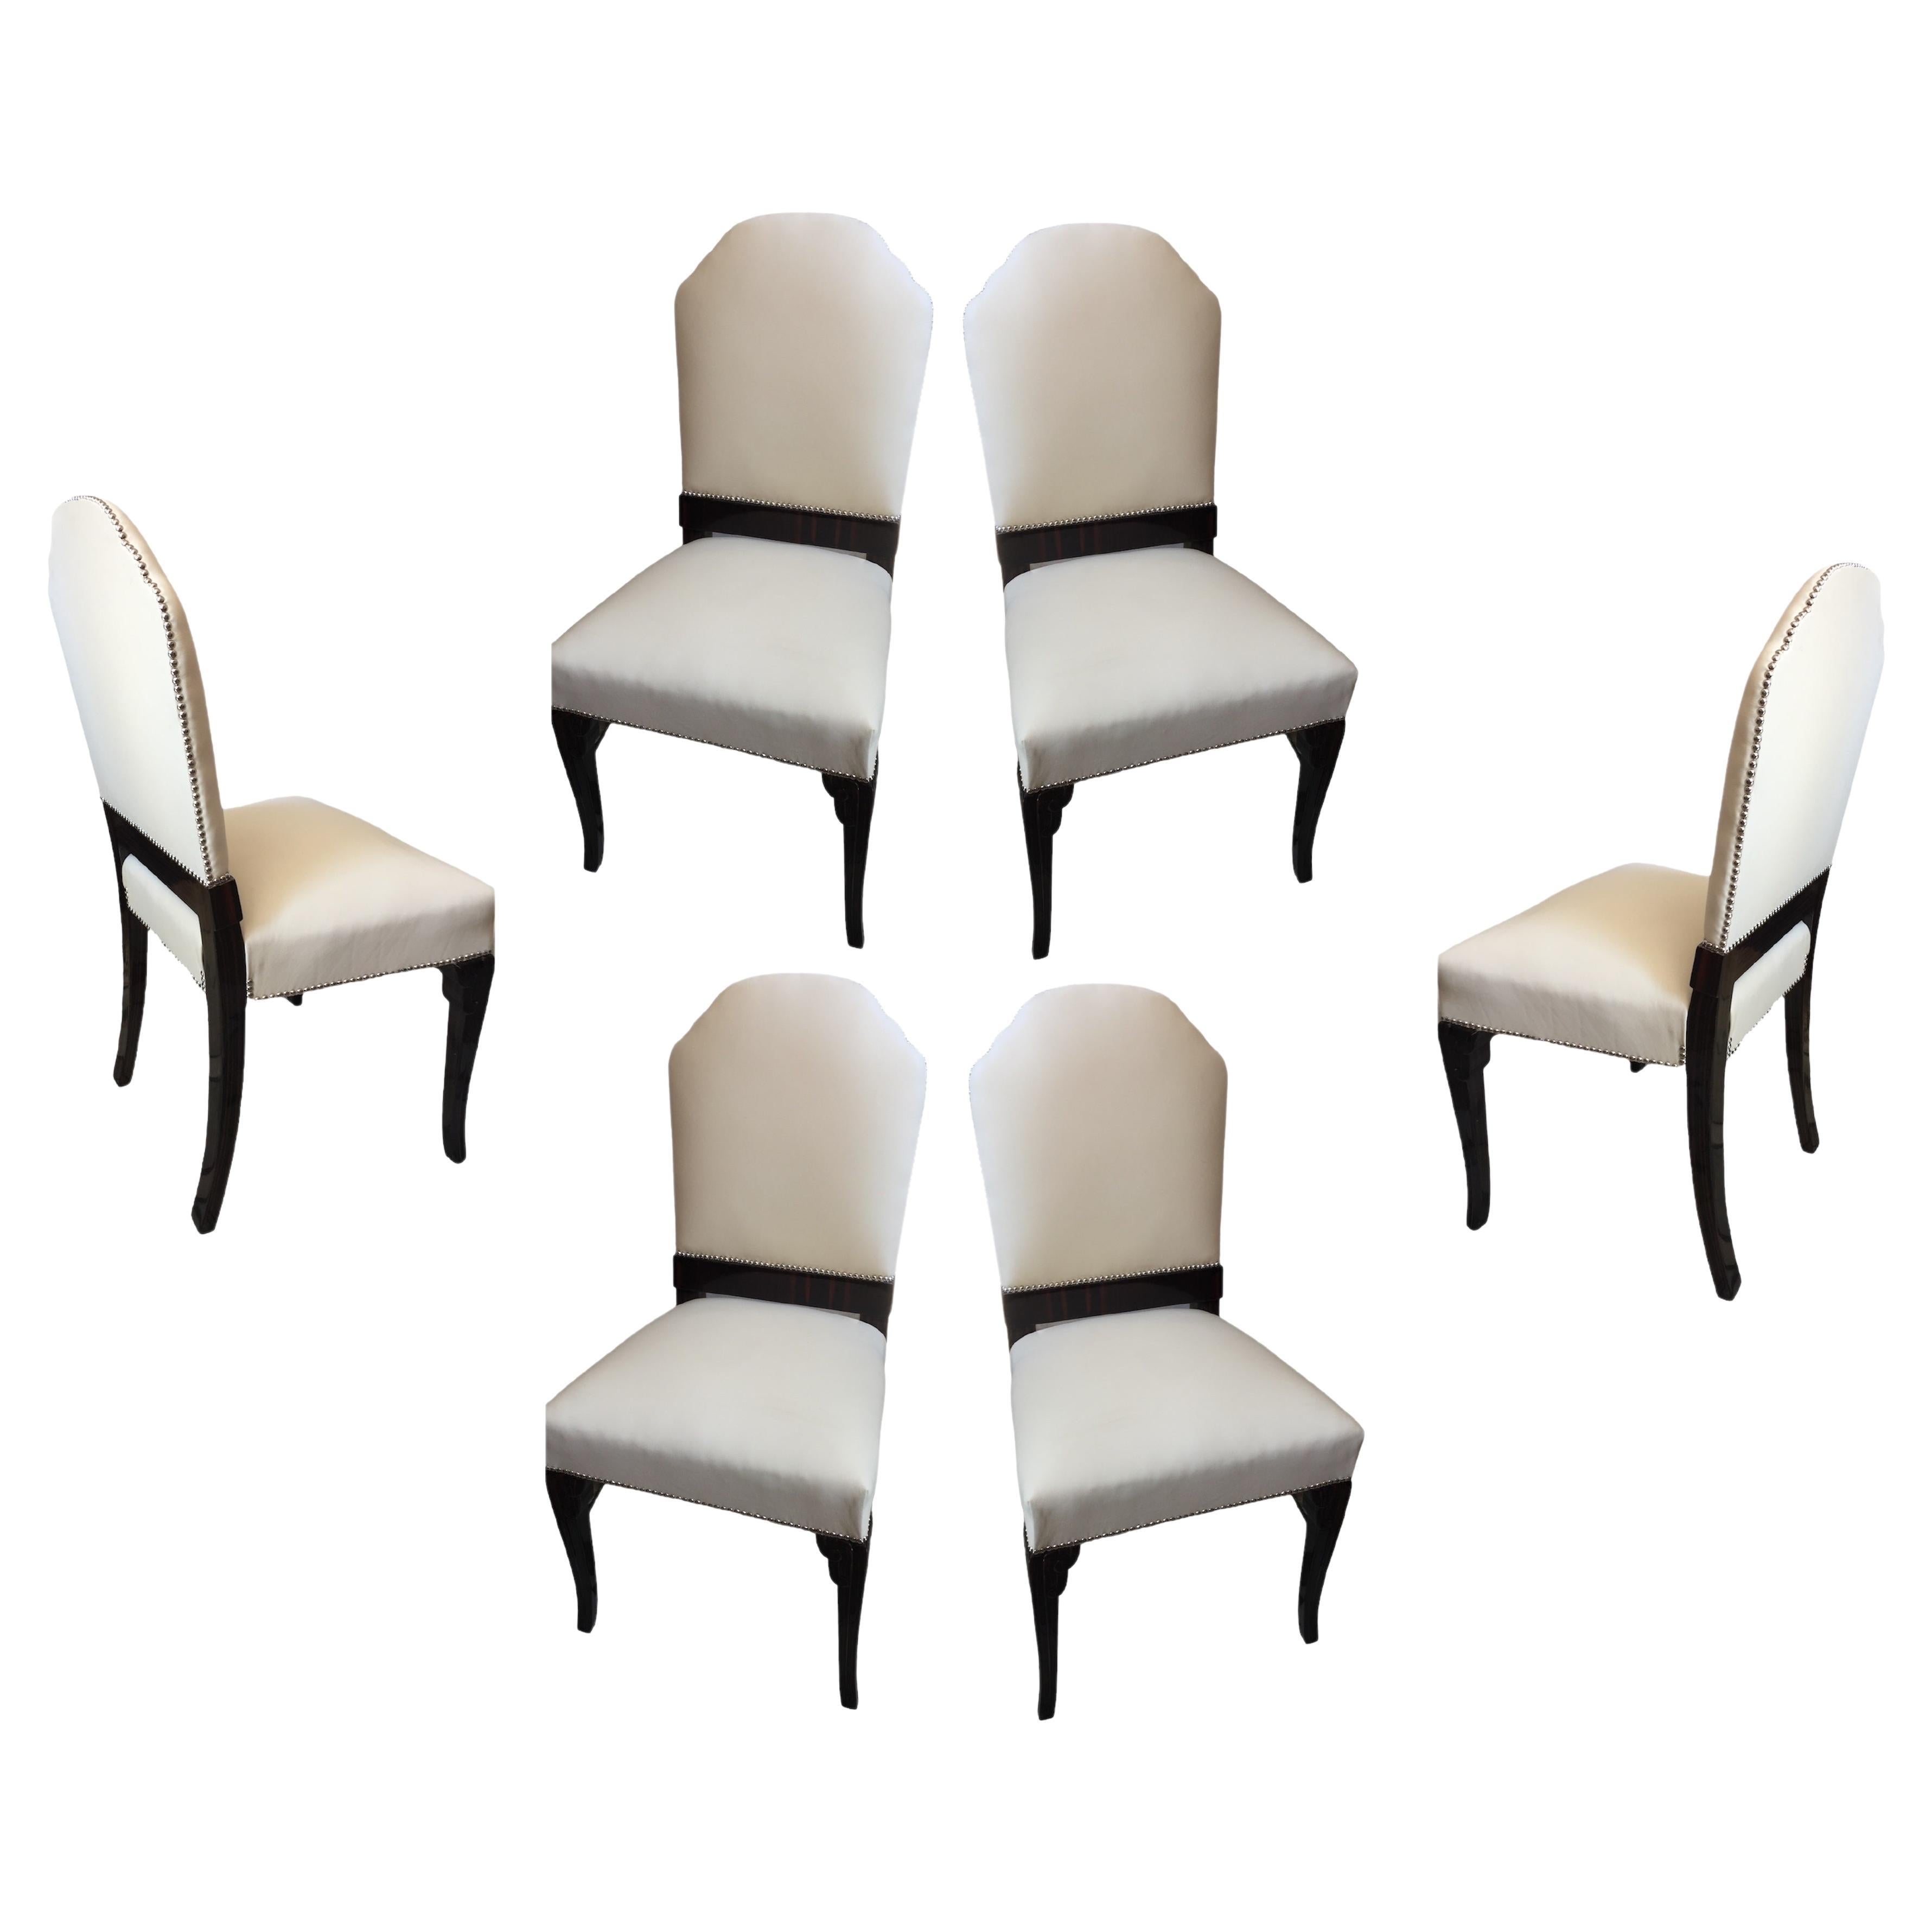 6 Stühle Stil: Art déco, Materialien: Leder und Holz